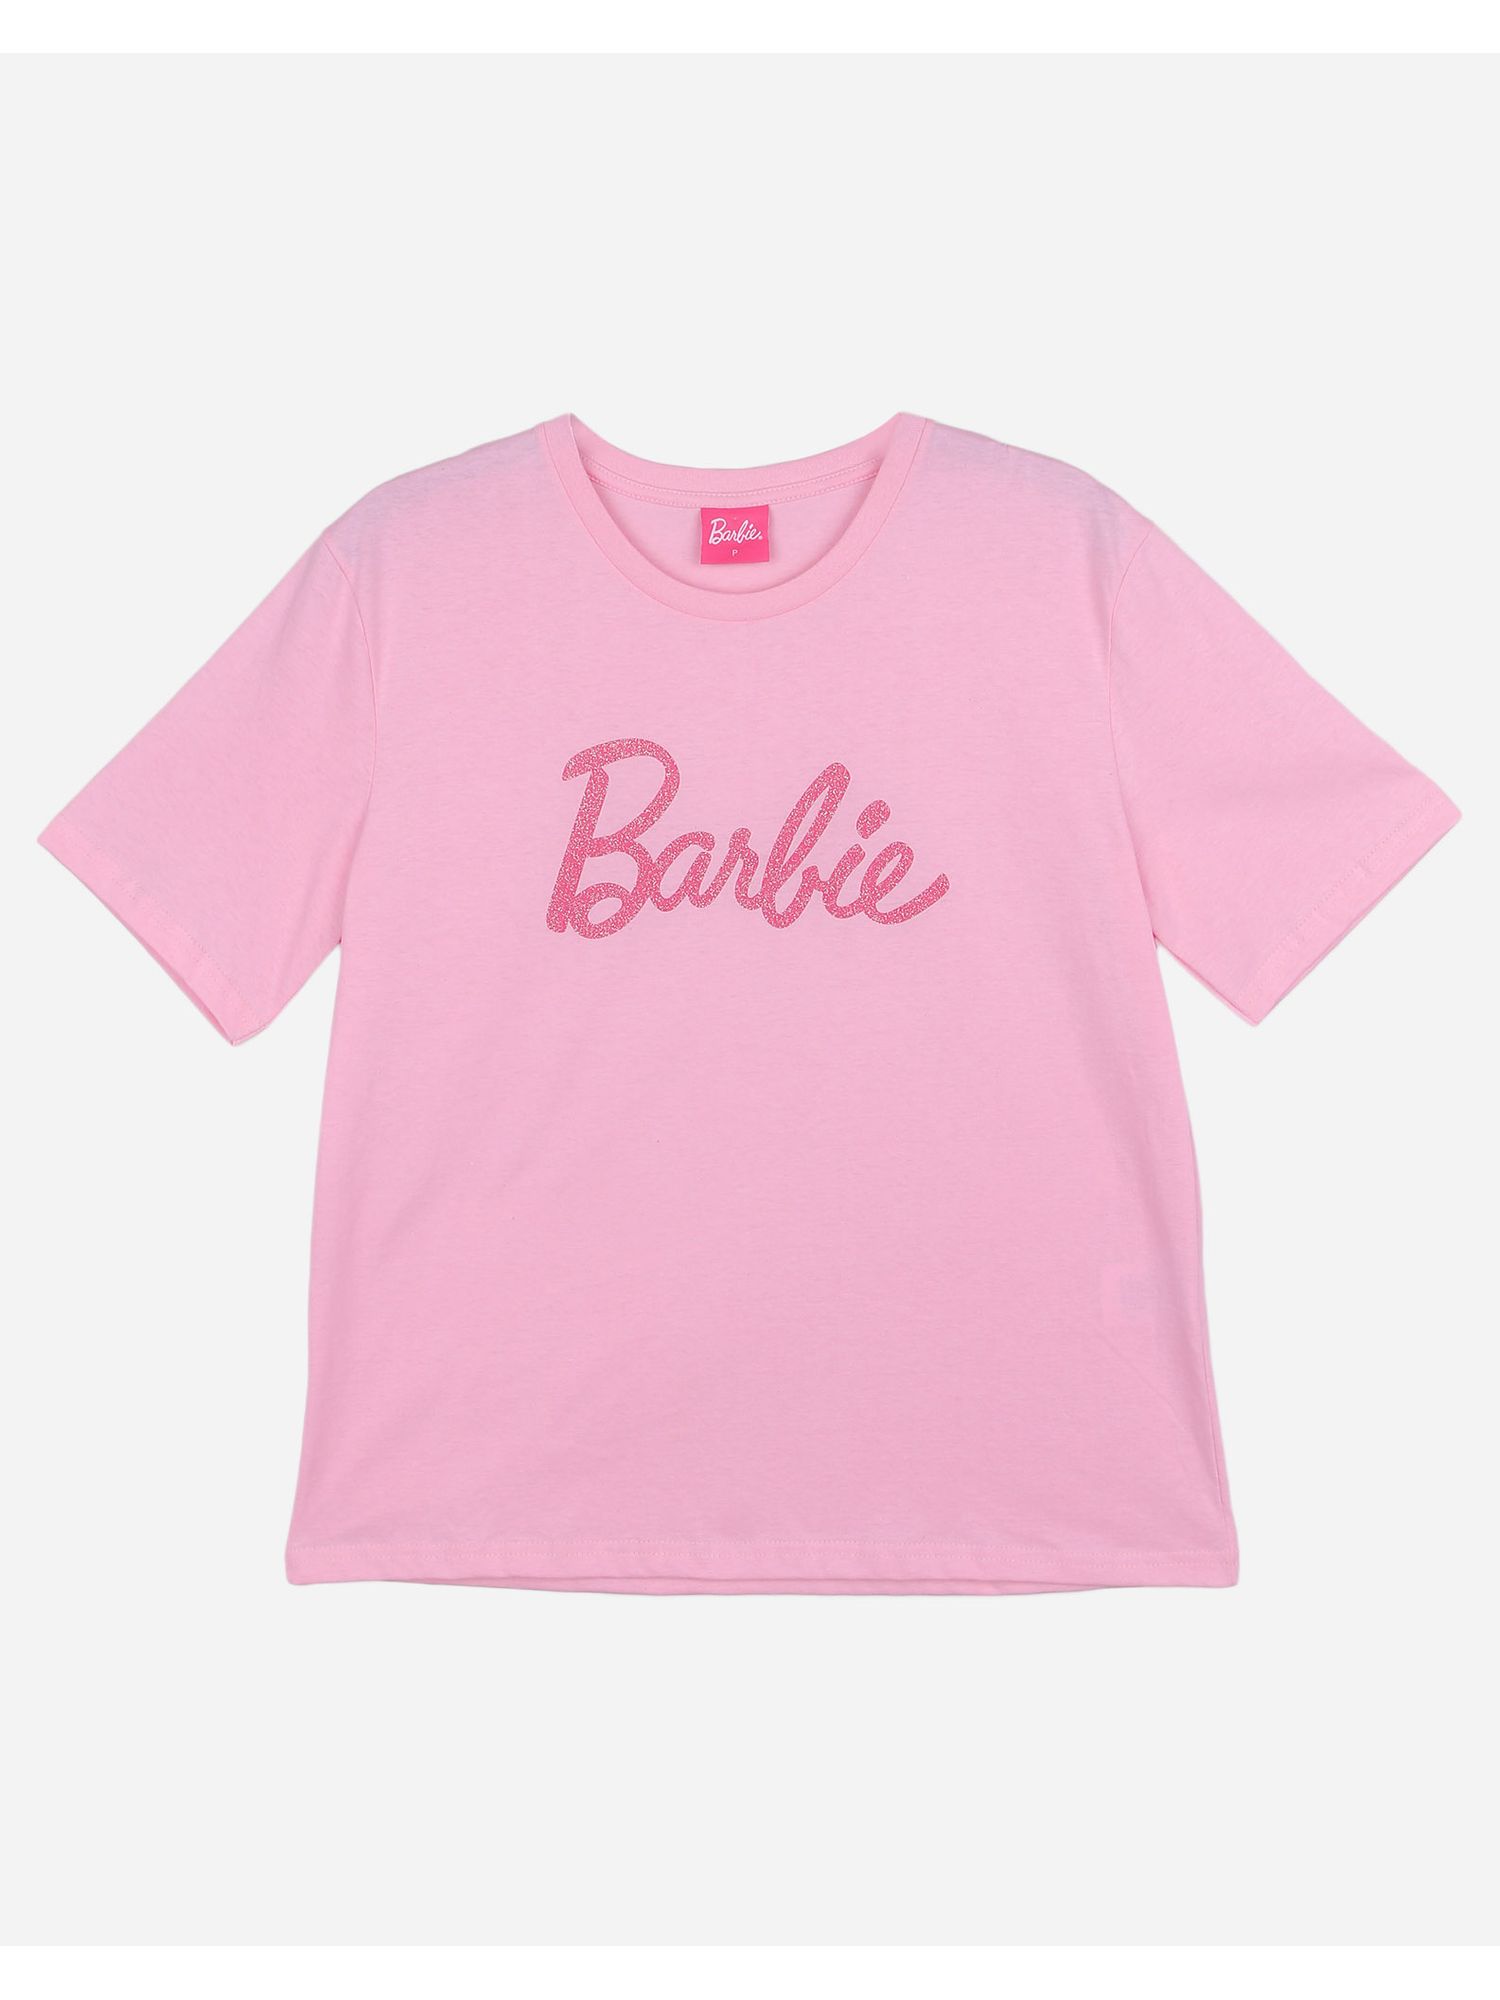 Blusa Plus Size Feminina Estampa Frontal Barbie